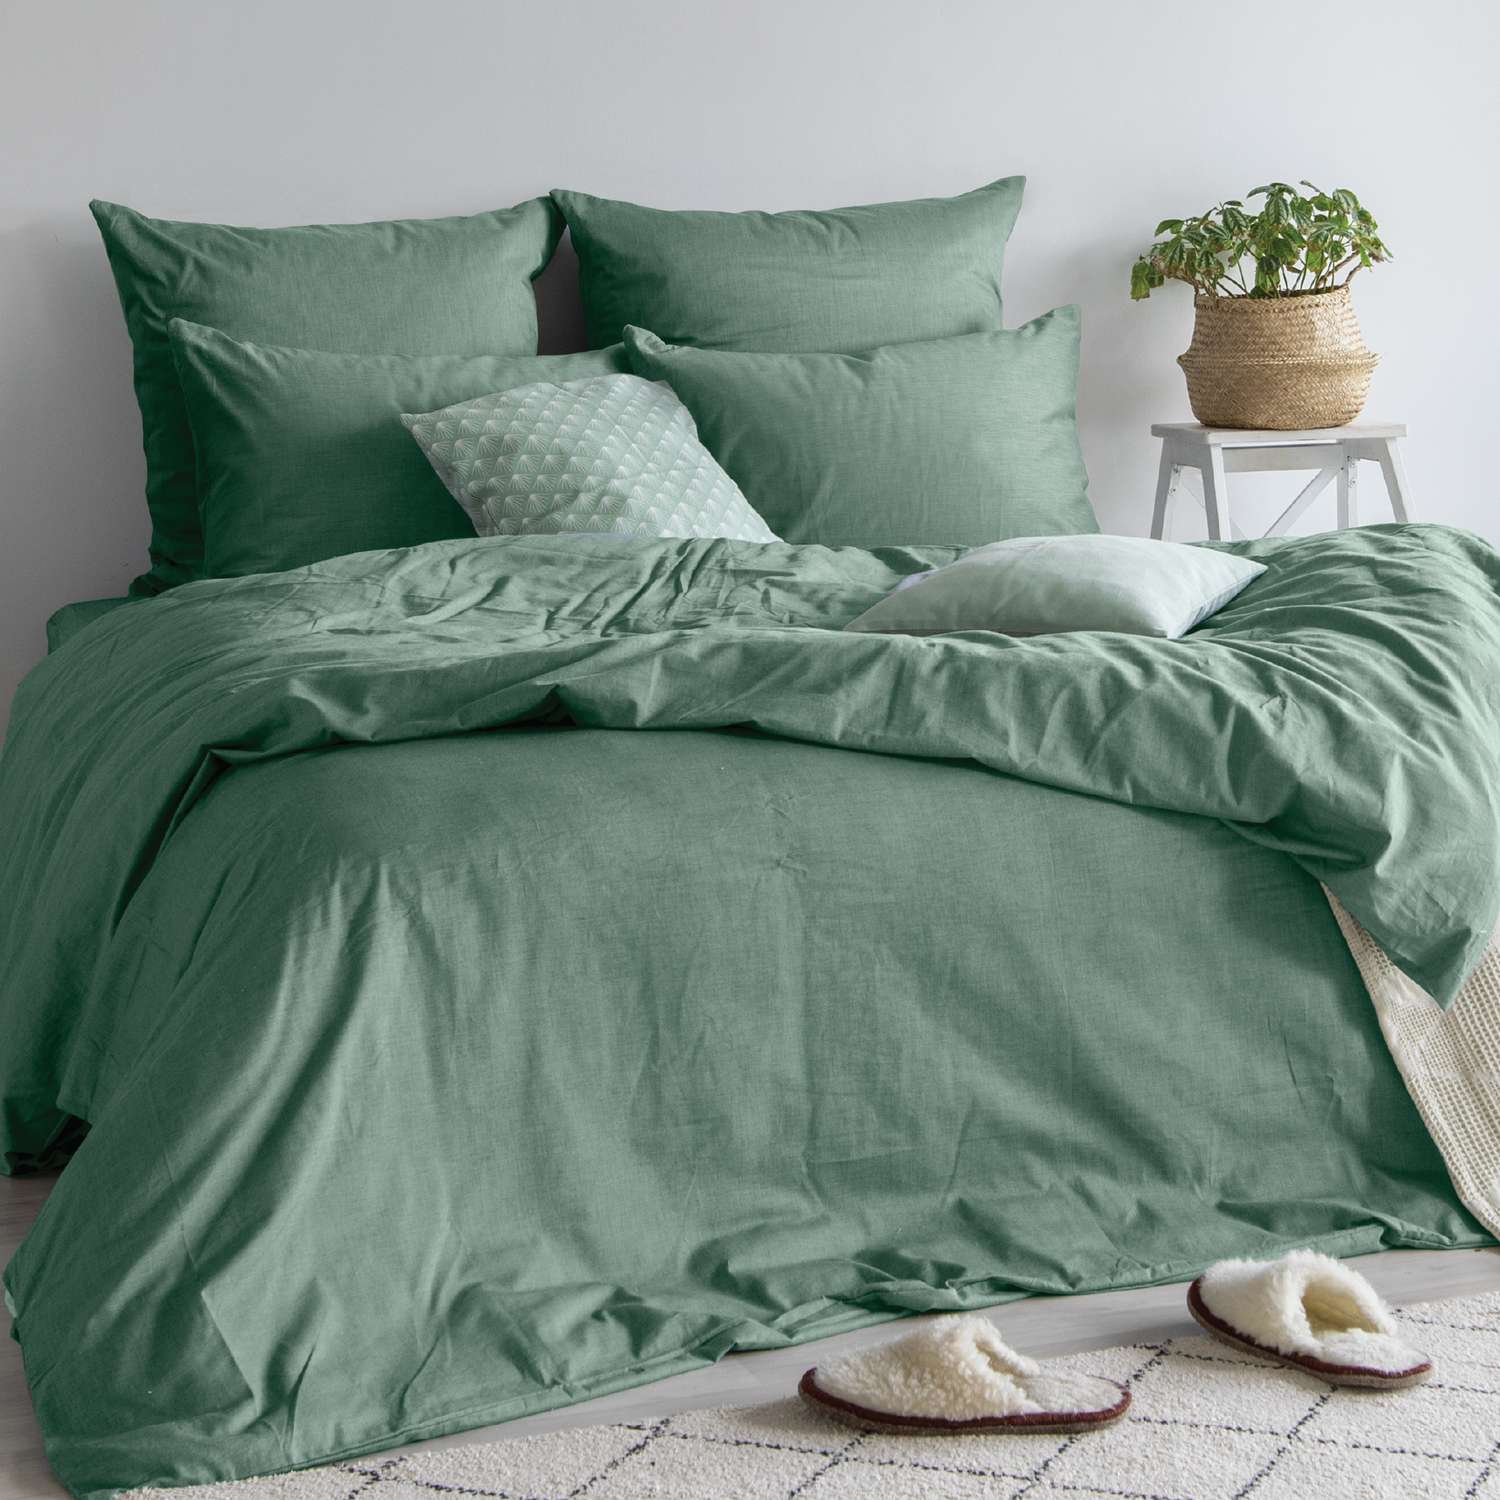 Комплект постельного белья Absolut 2СП Emerald наволочки 70х70см меланж - фото 2